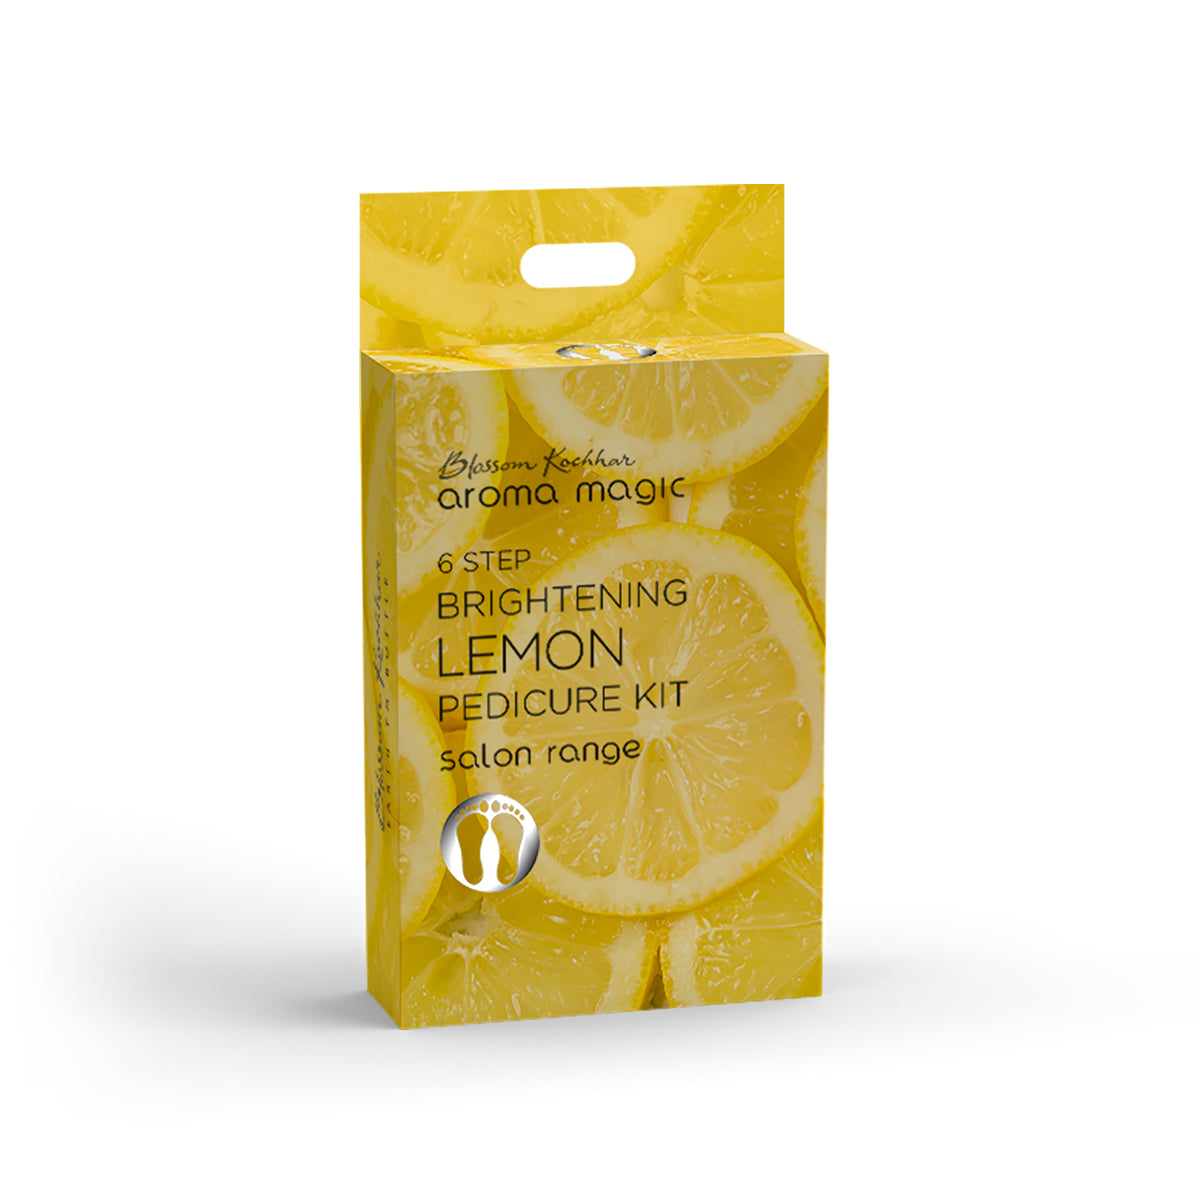 Brightening Lemon Manicure & Pedicure Kit